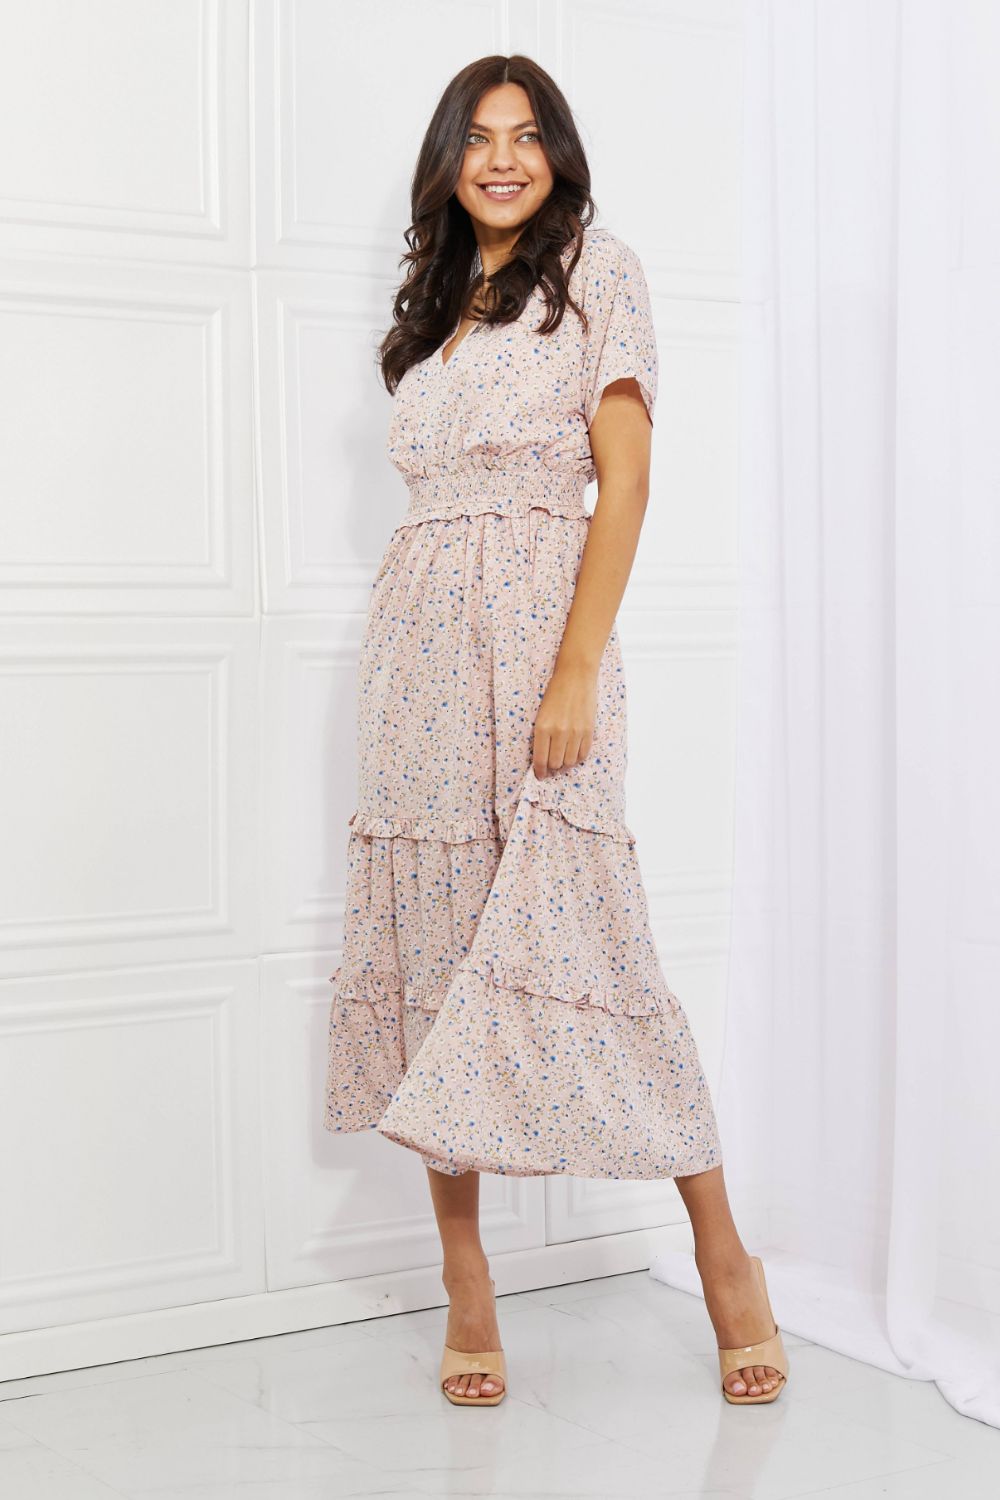 HEYSON Sweet Talk Kimono Sleeve Maxi Dress in Blush Pink - Online Only